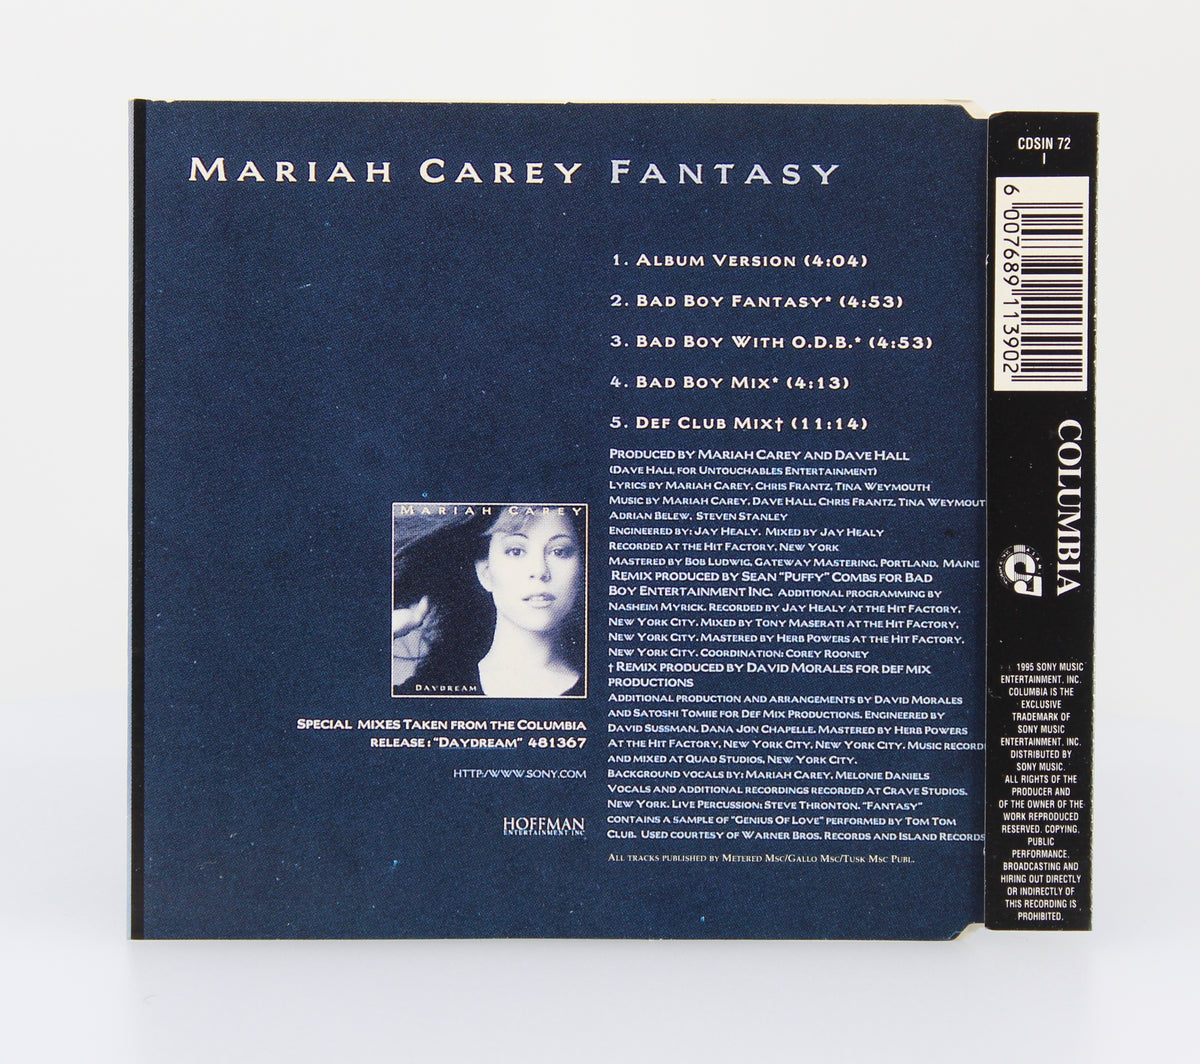 Mariah Carey ‎– Fantasy, CD Single, South Africa 1995